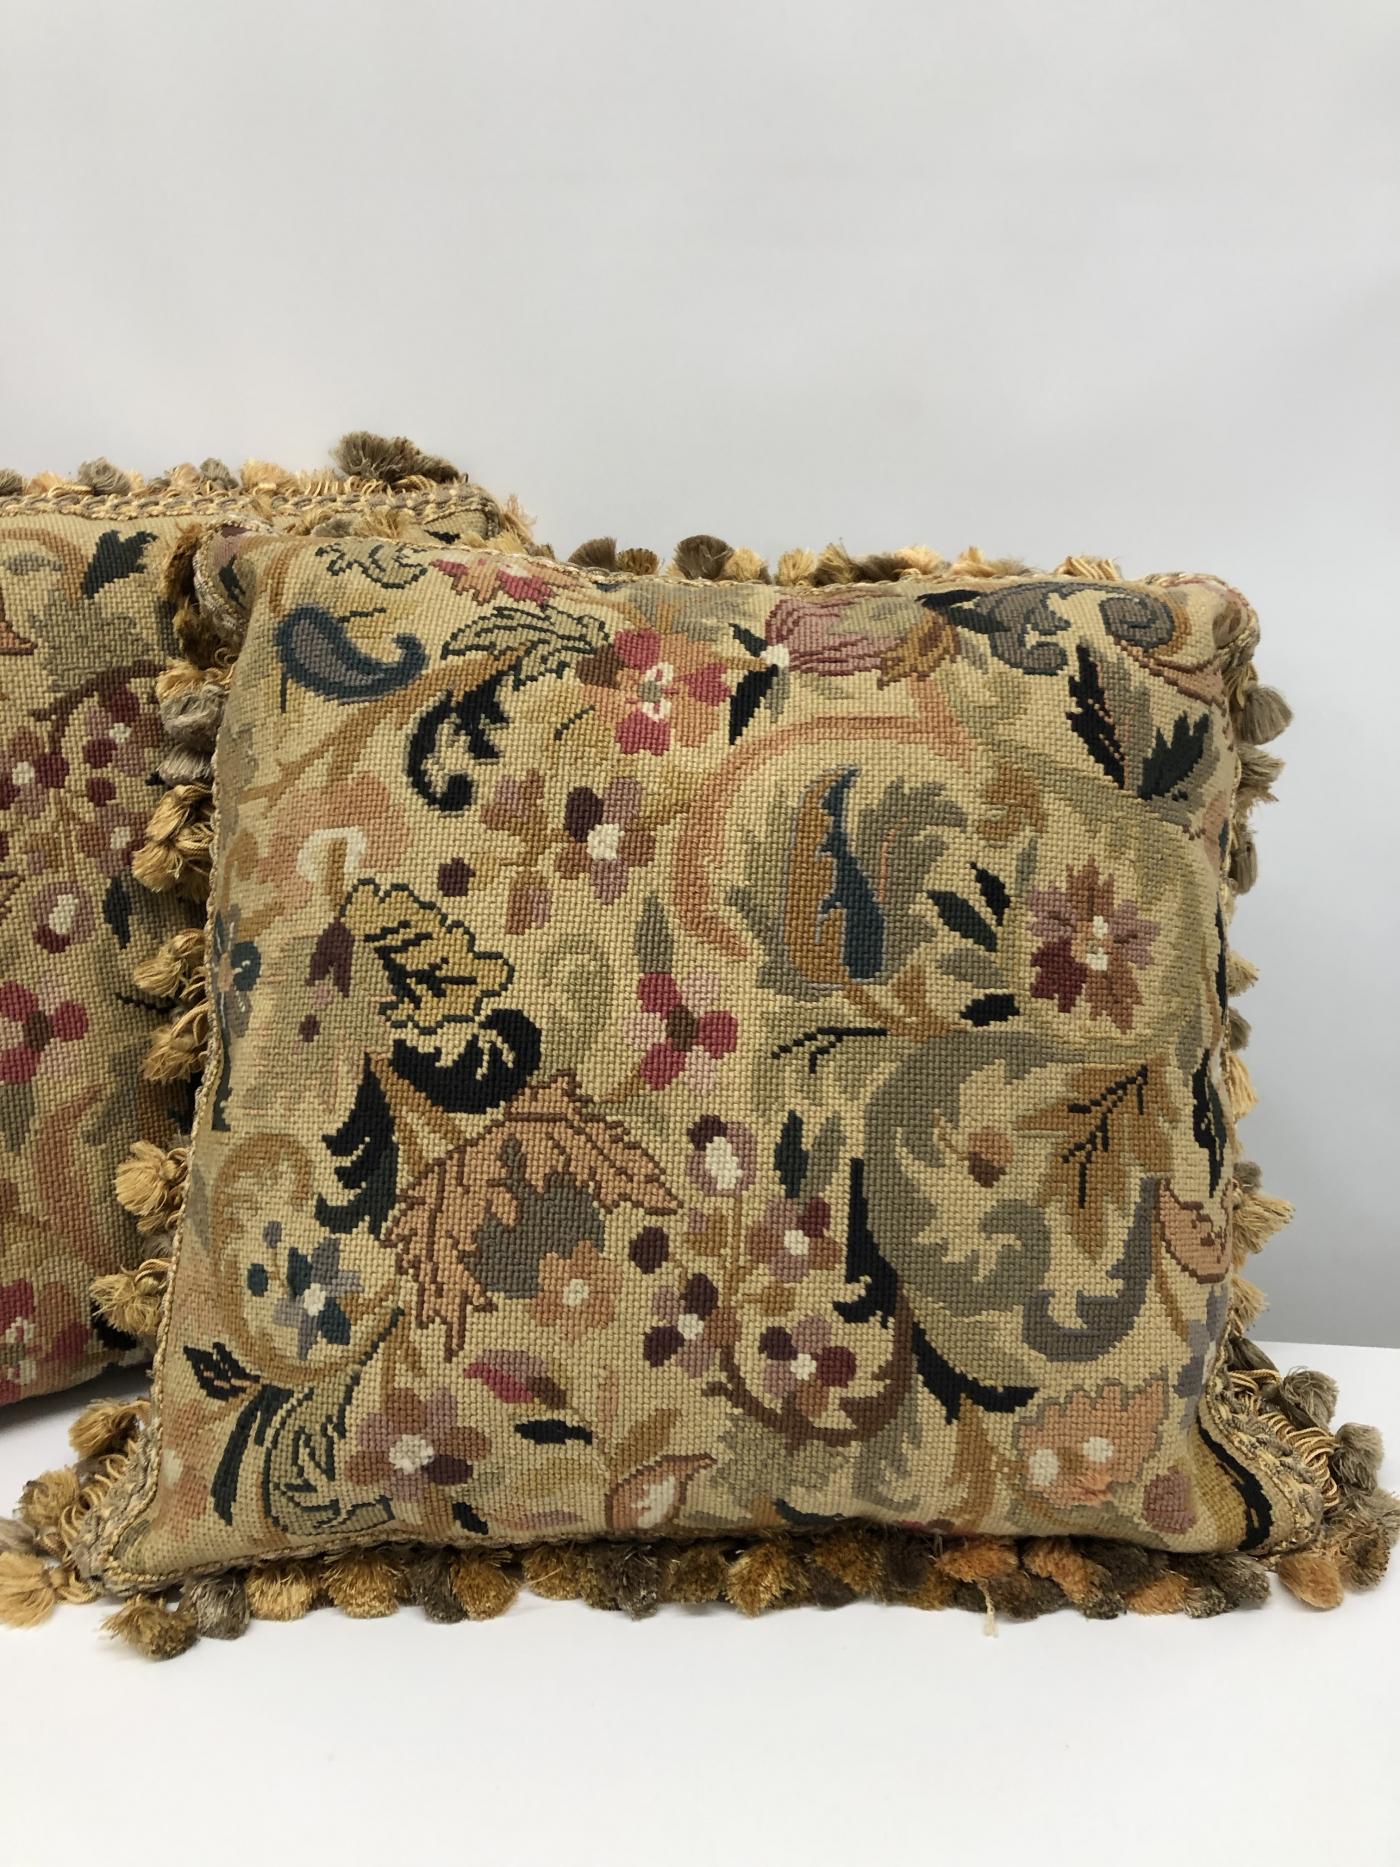 Pair of 19th century needlepoint pillows